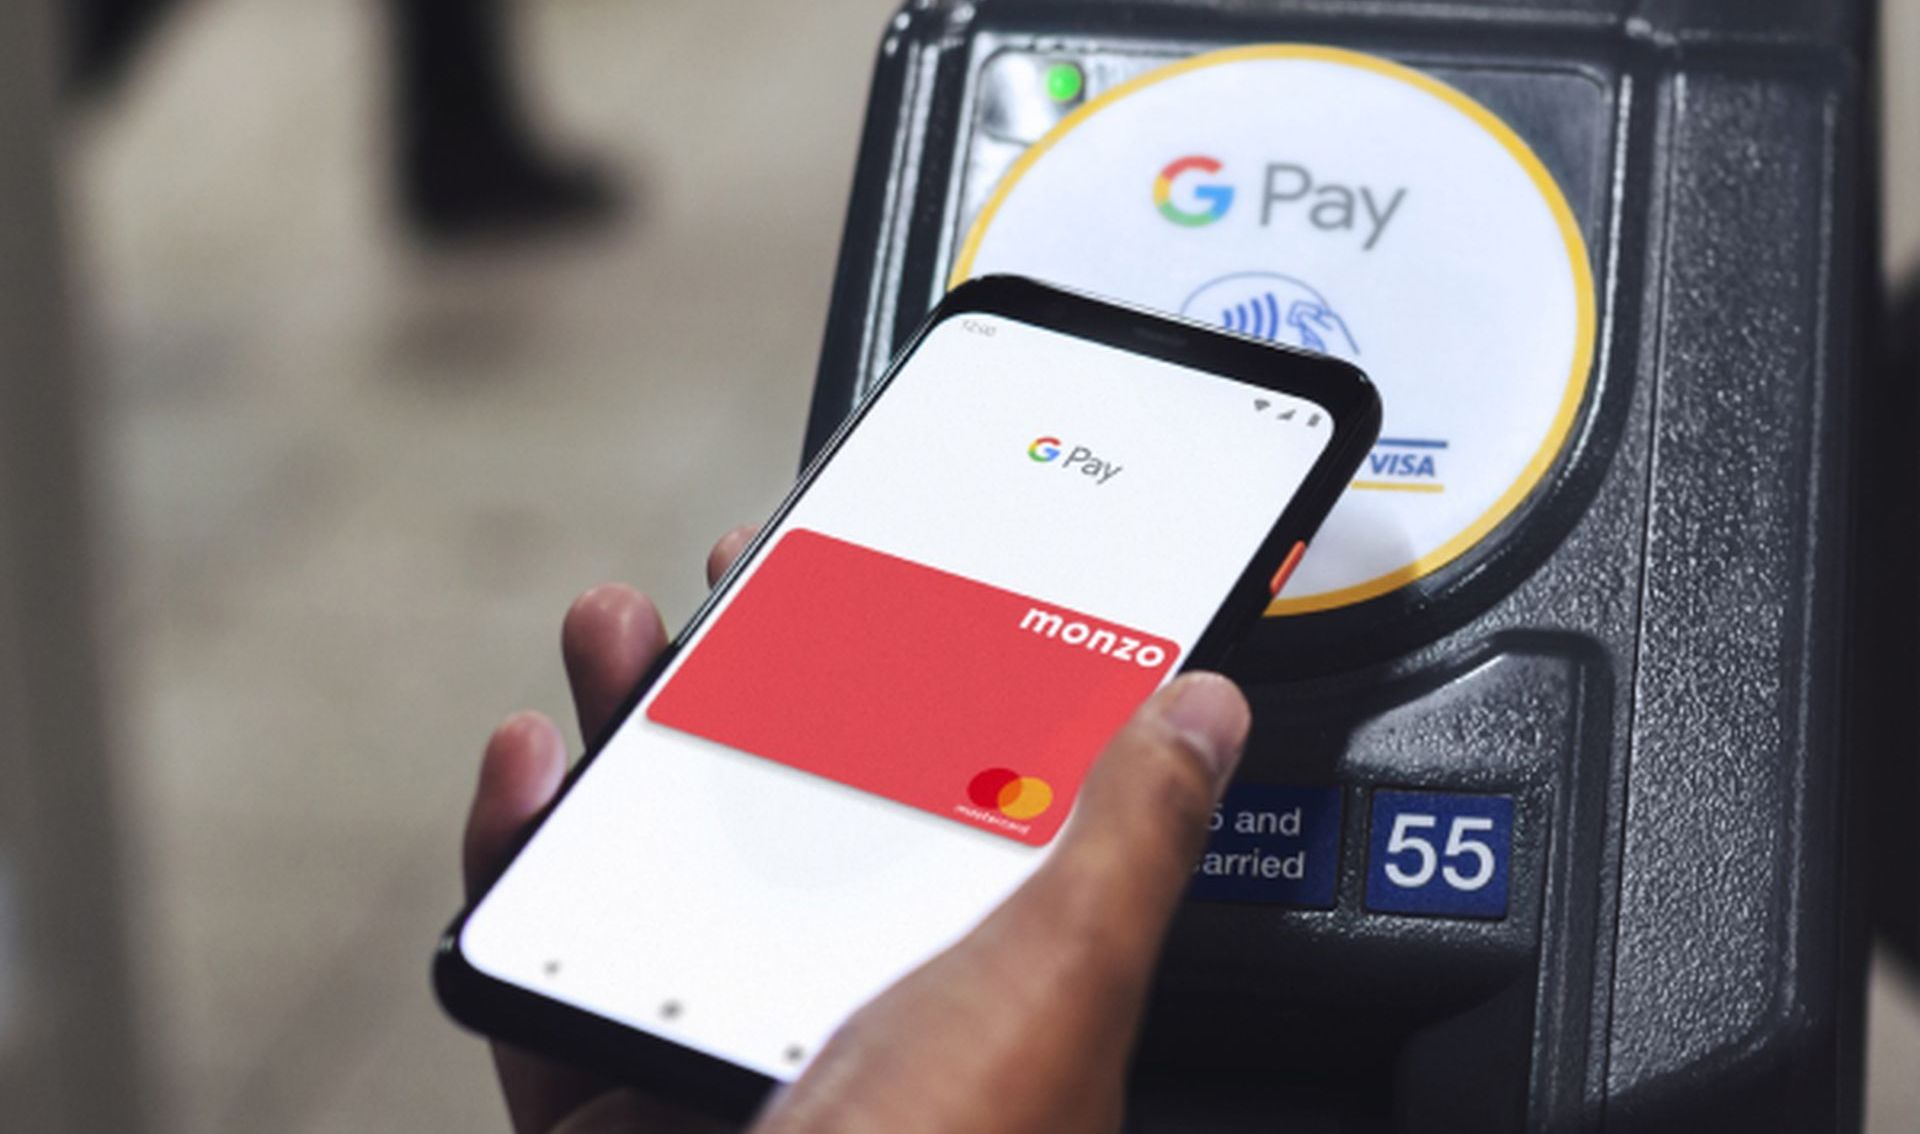 Apakah Google Wallet tidak berfungsi? Pelajari perbaikan mudah dan alternatif yang layak